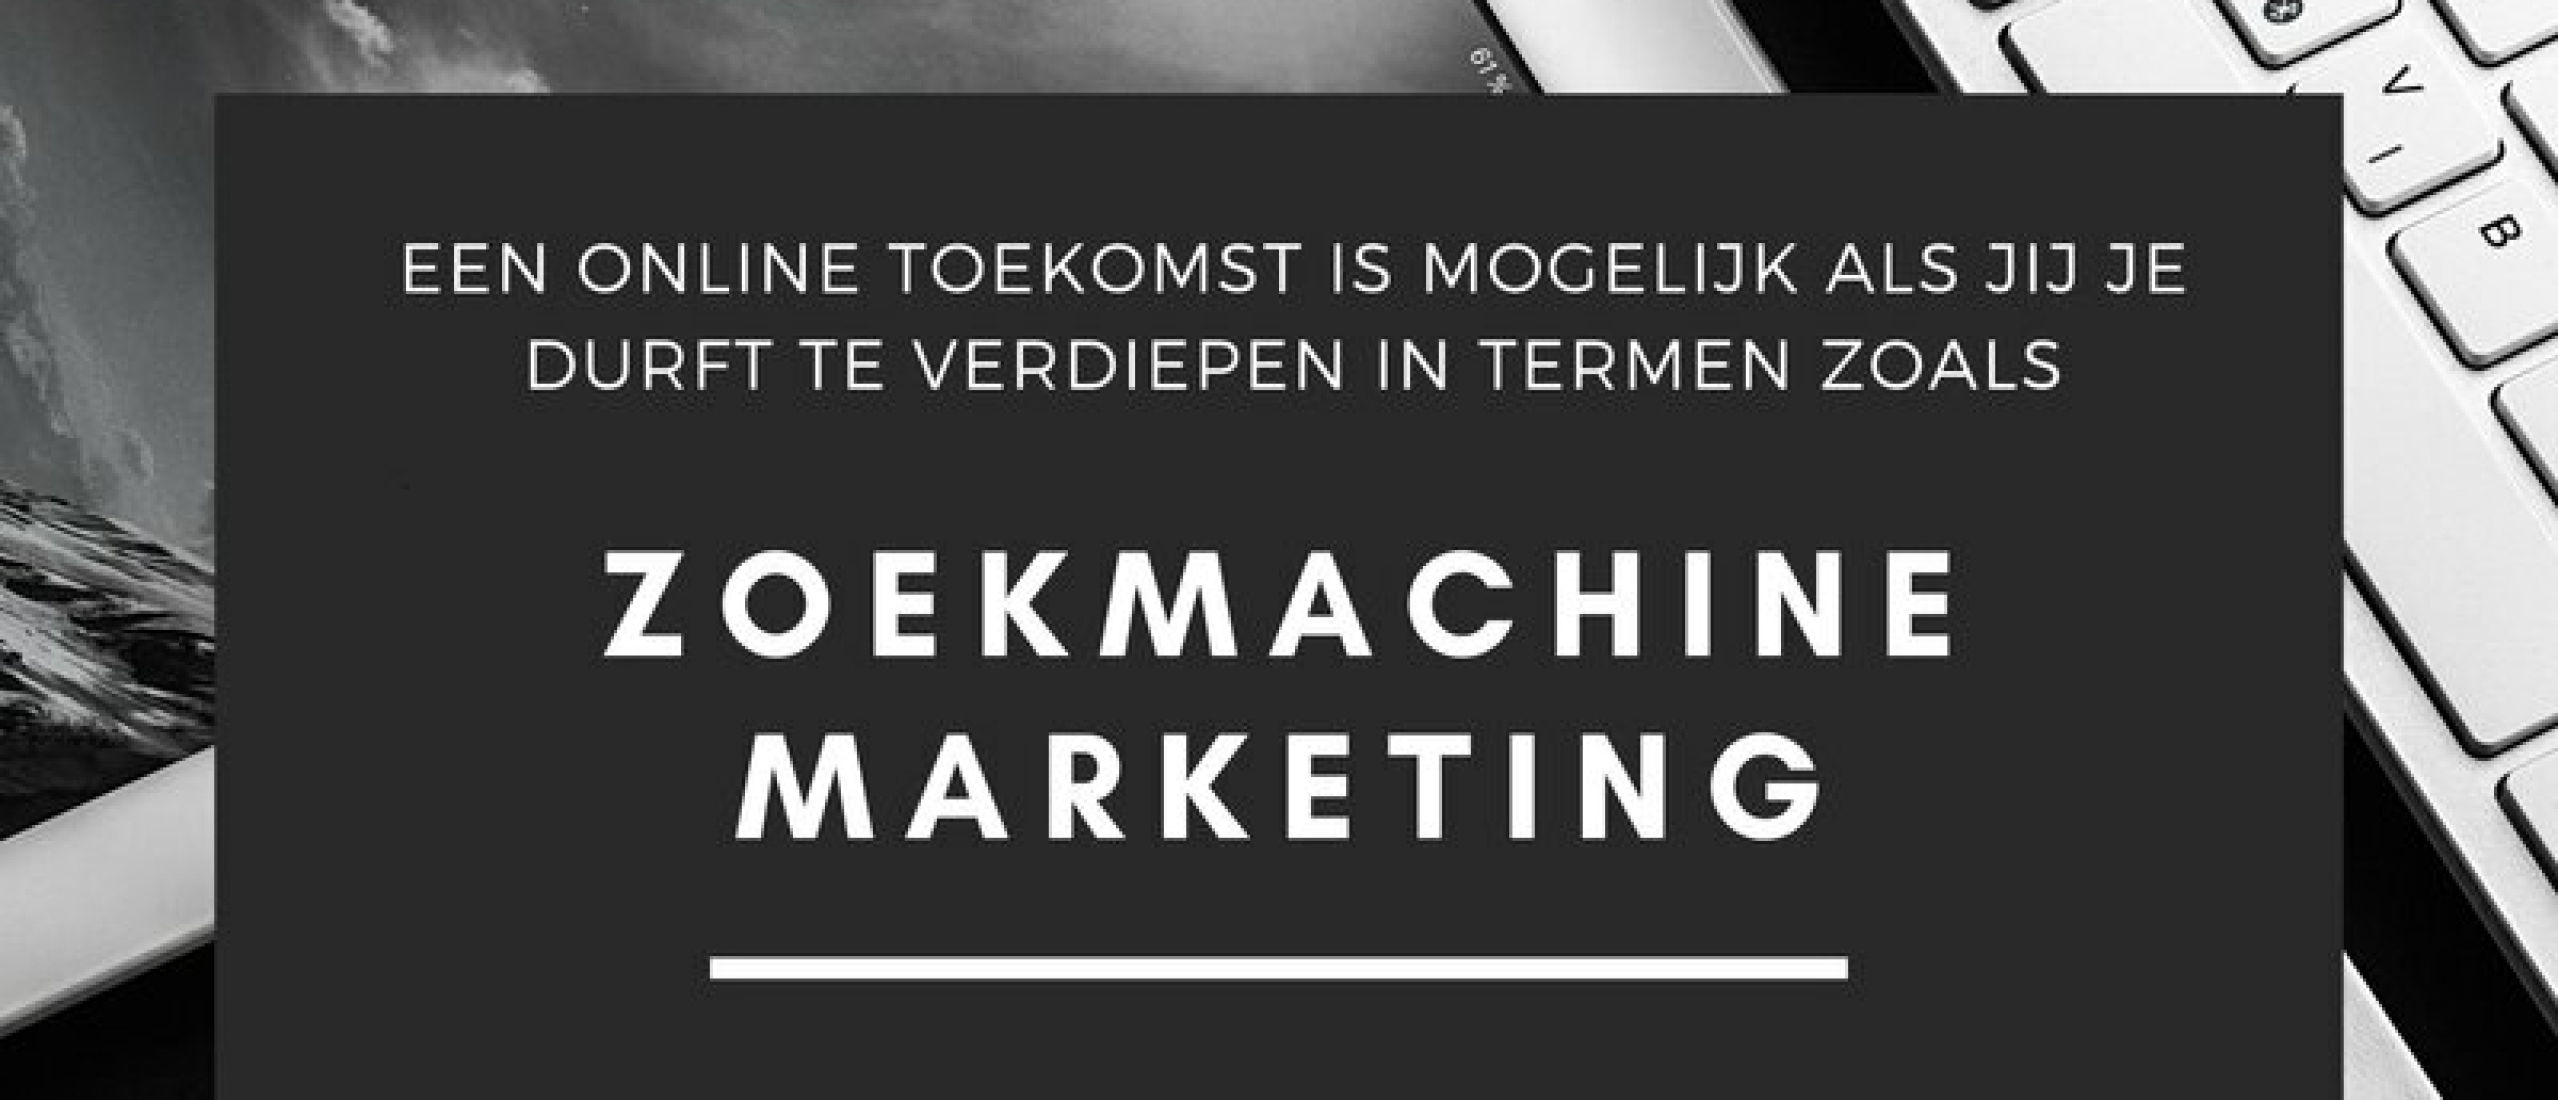 Zoekmachine Marketing